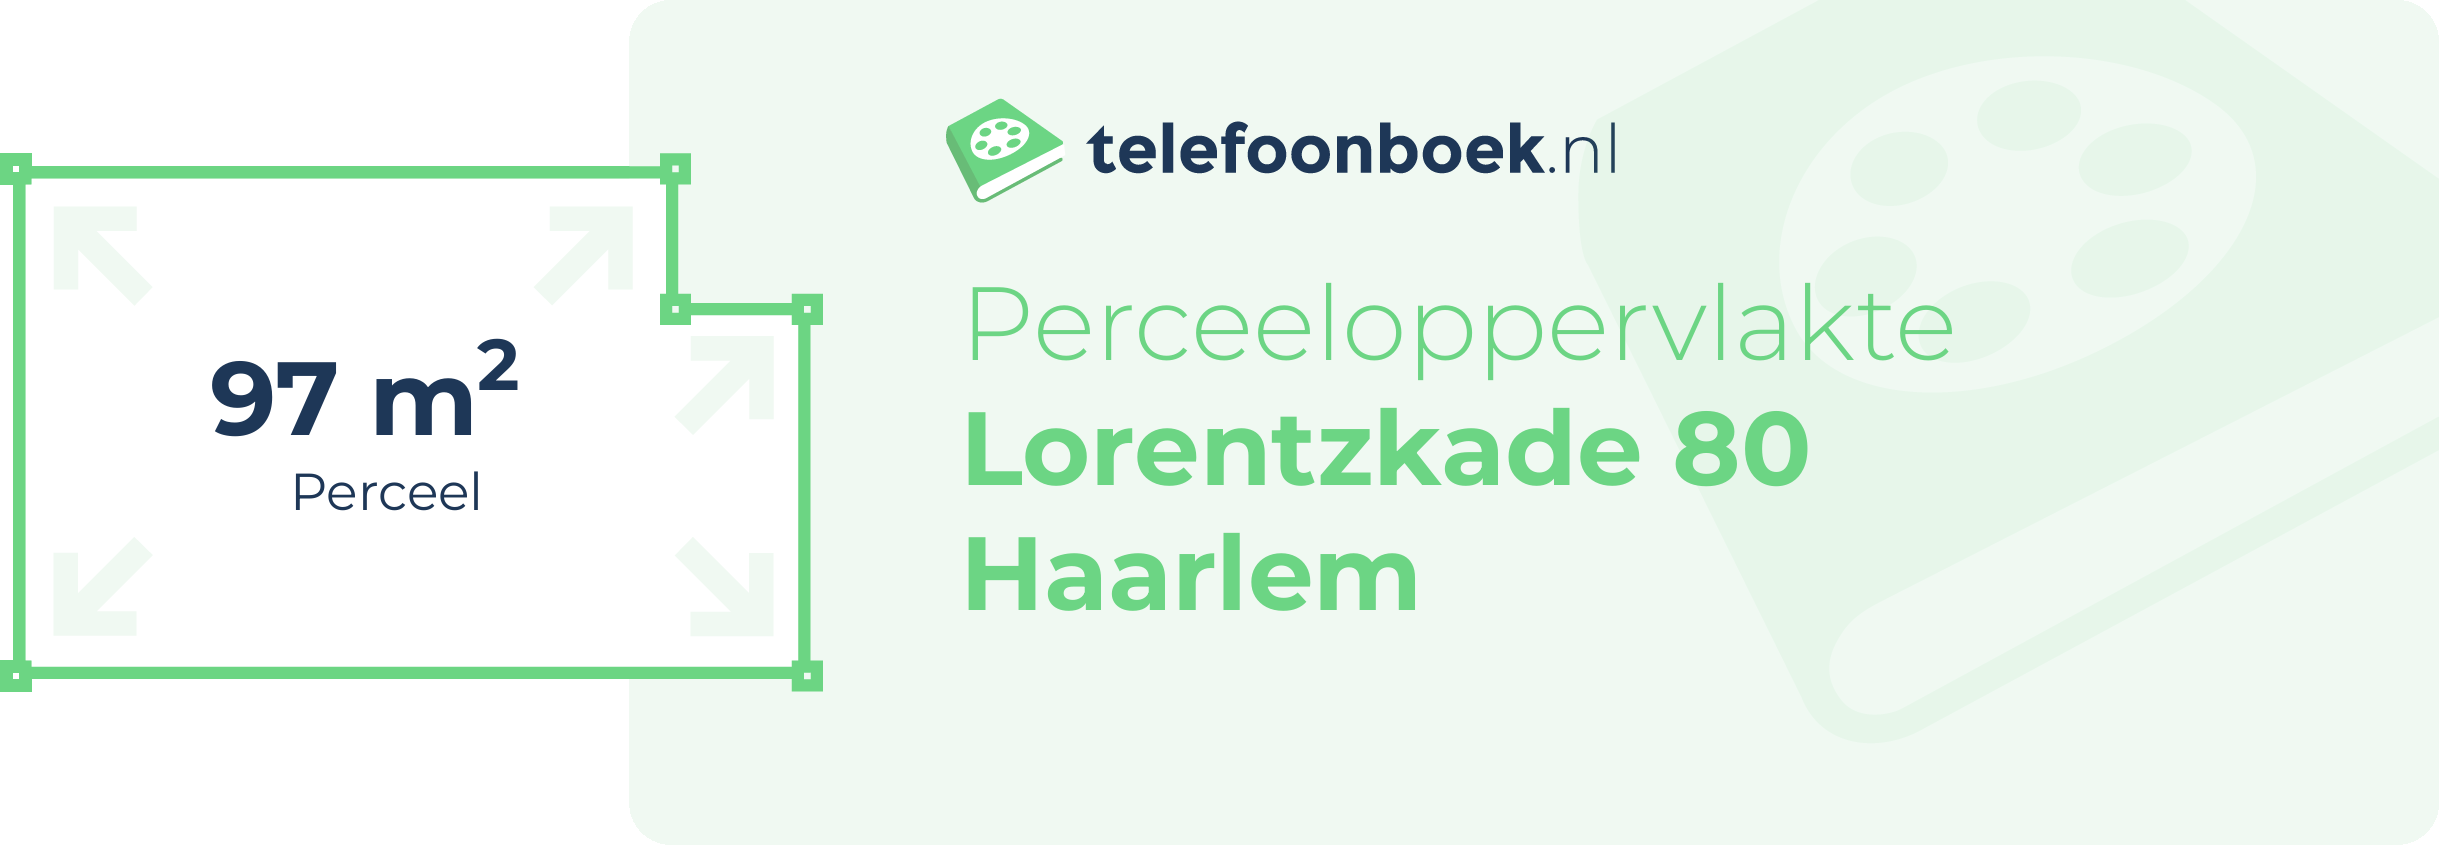 Perceeloppervlakte Lorentzkade 80 Haarlem